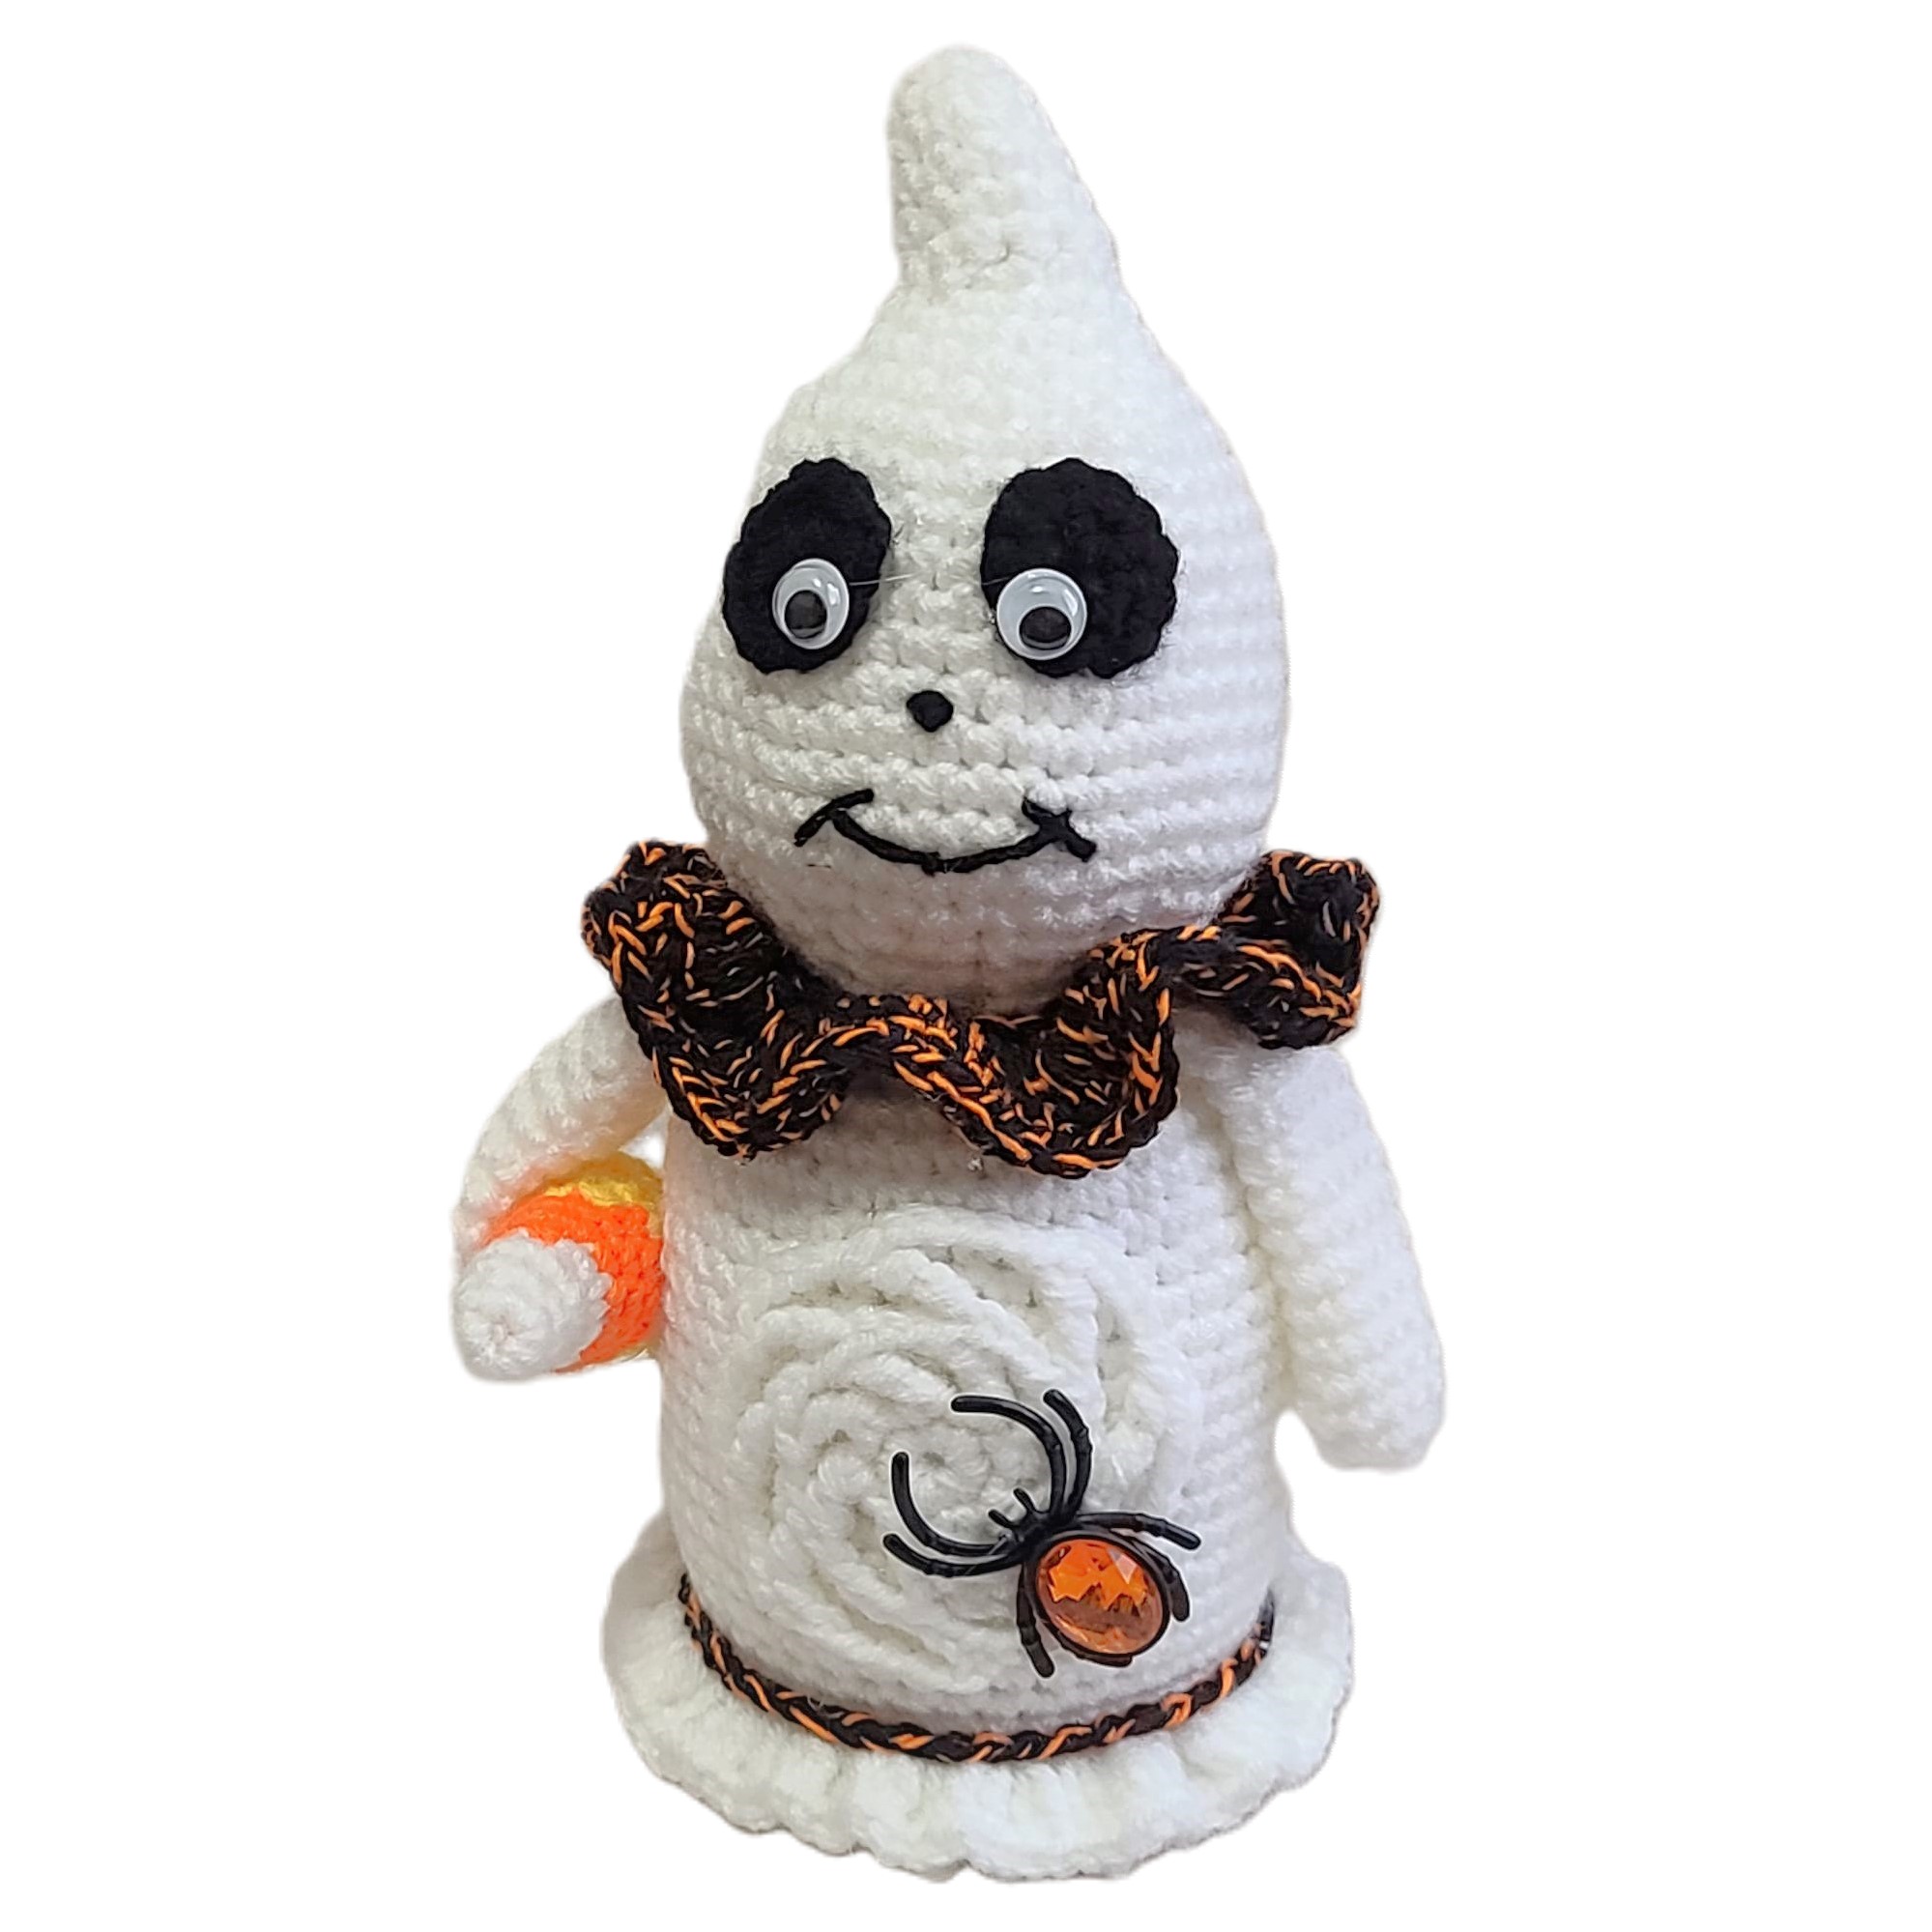 Crochet amigurumi handmade ghost